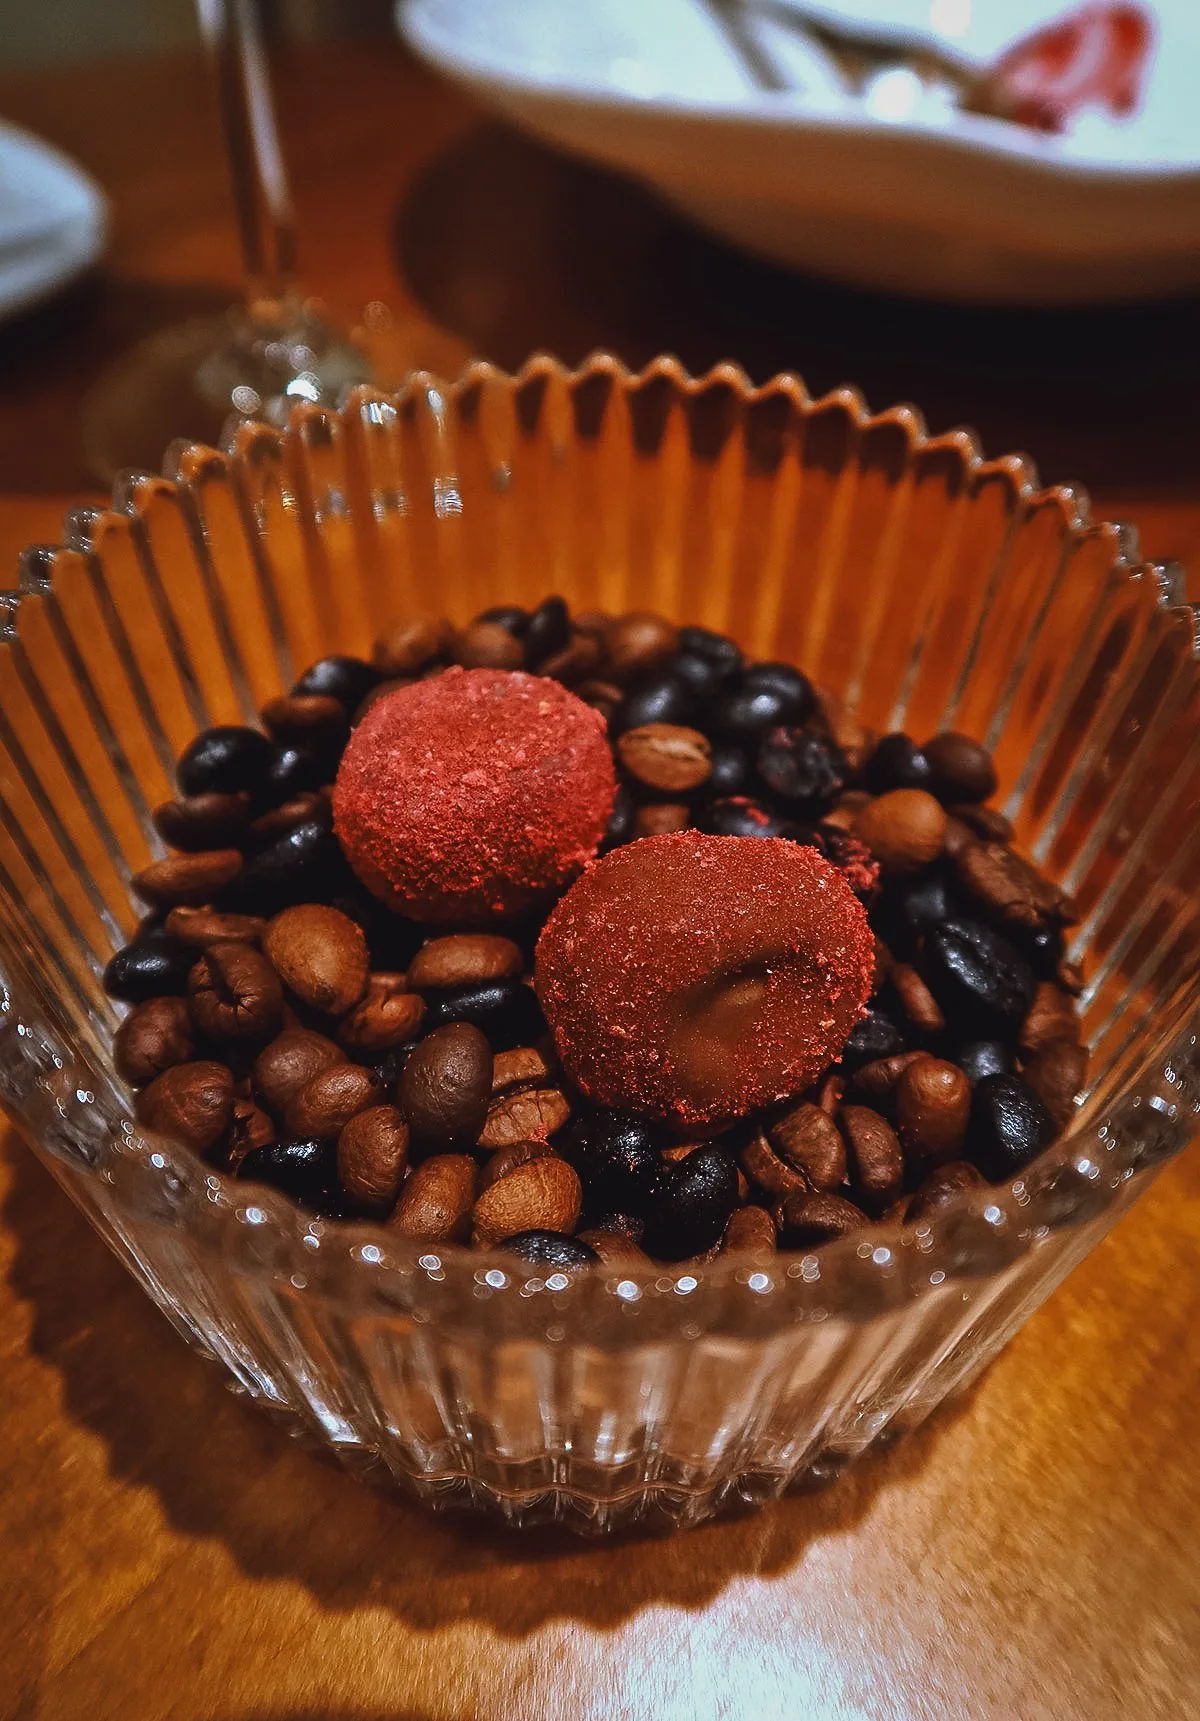 Raspberry chocolate dessert at a restaurant in Malaga